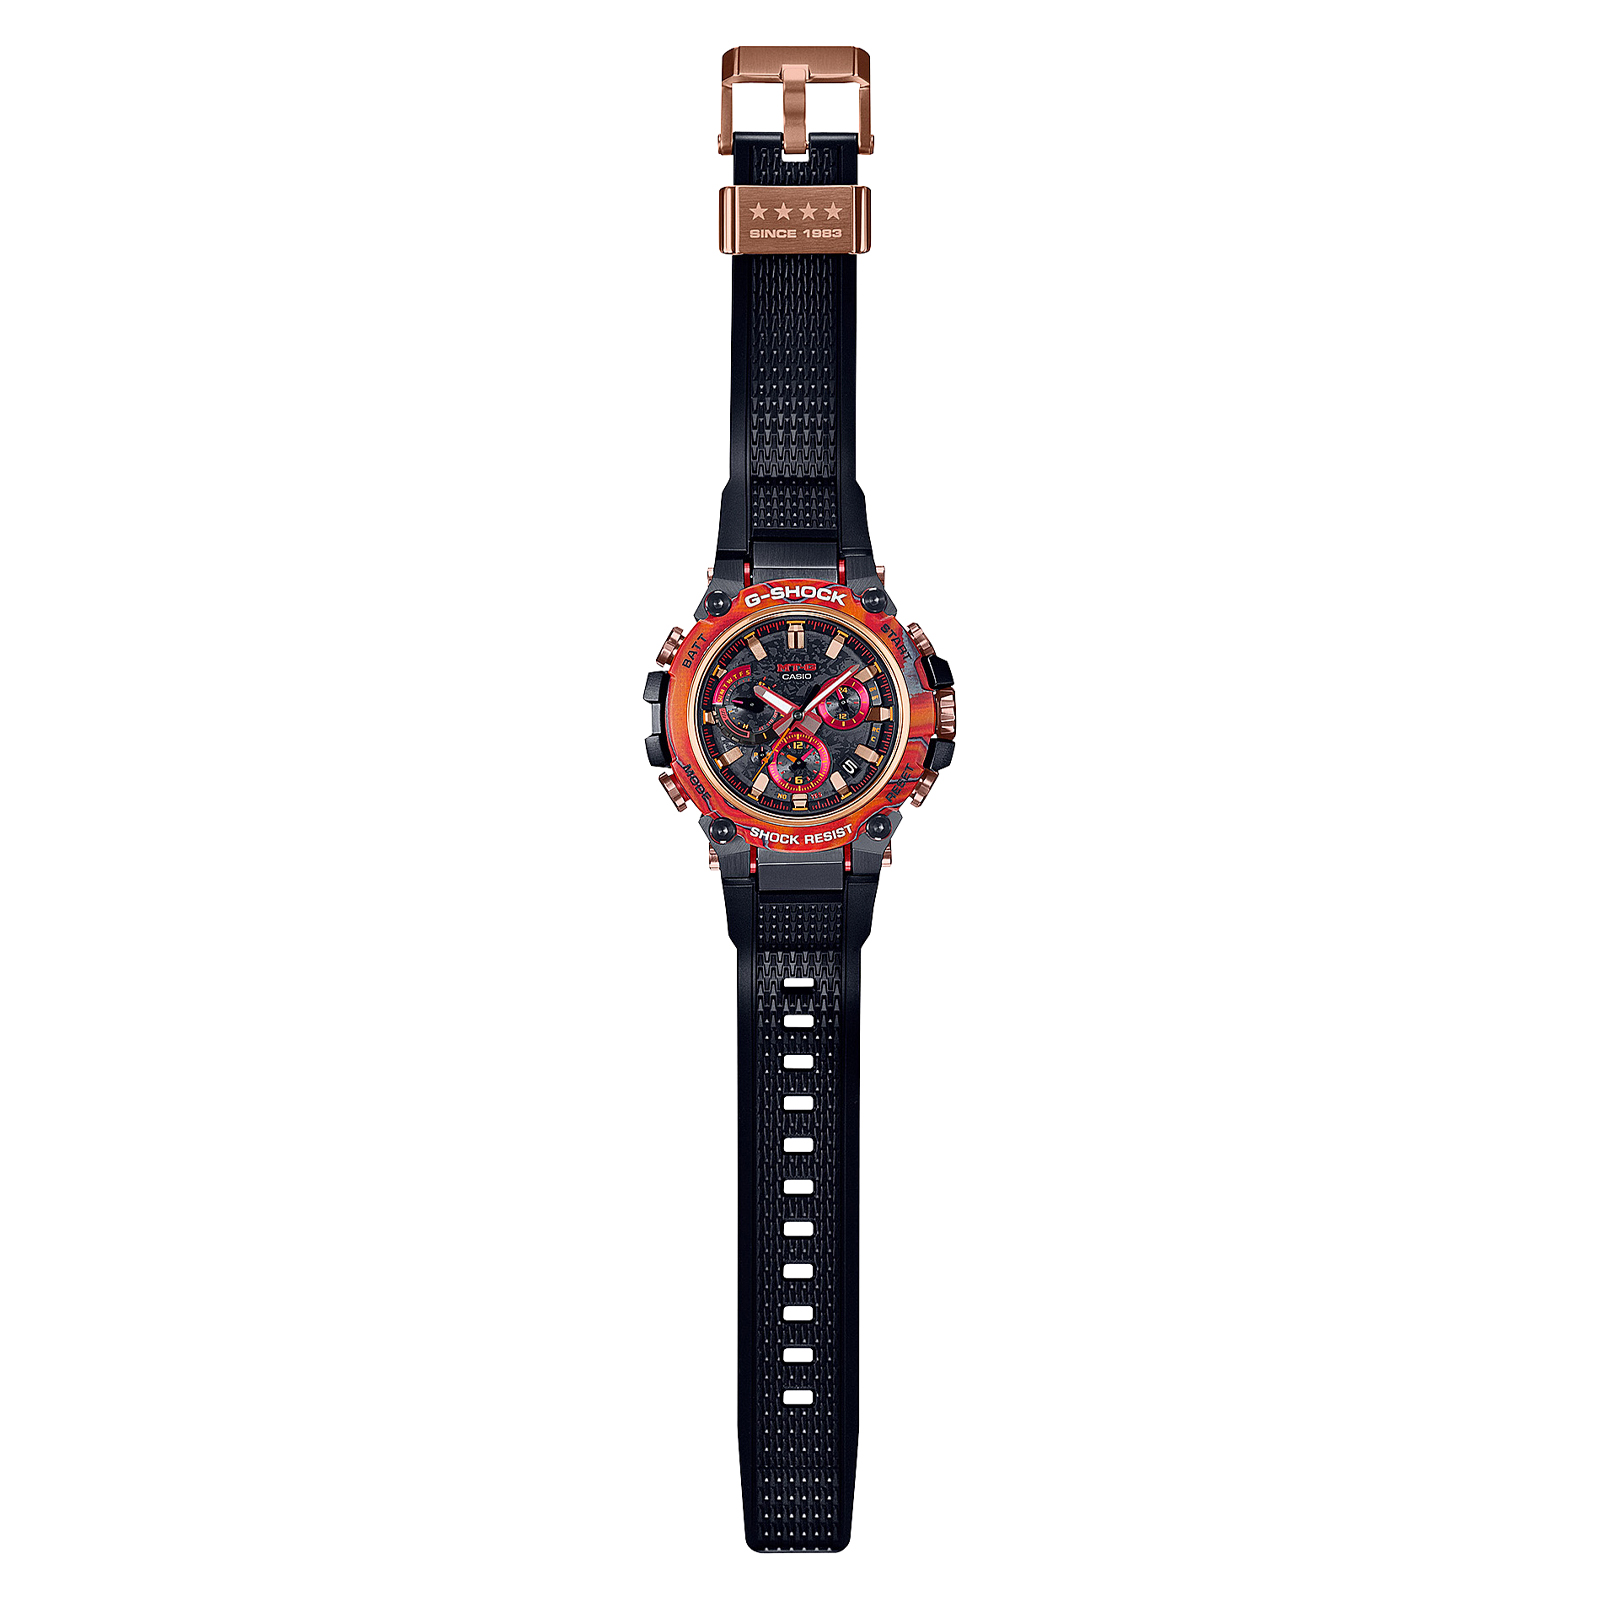 Reloj G-SHOCK MTG-B3000FR-1A Carbono/Acero Hombre Negro